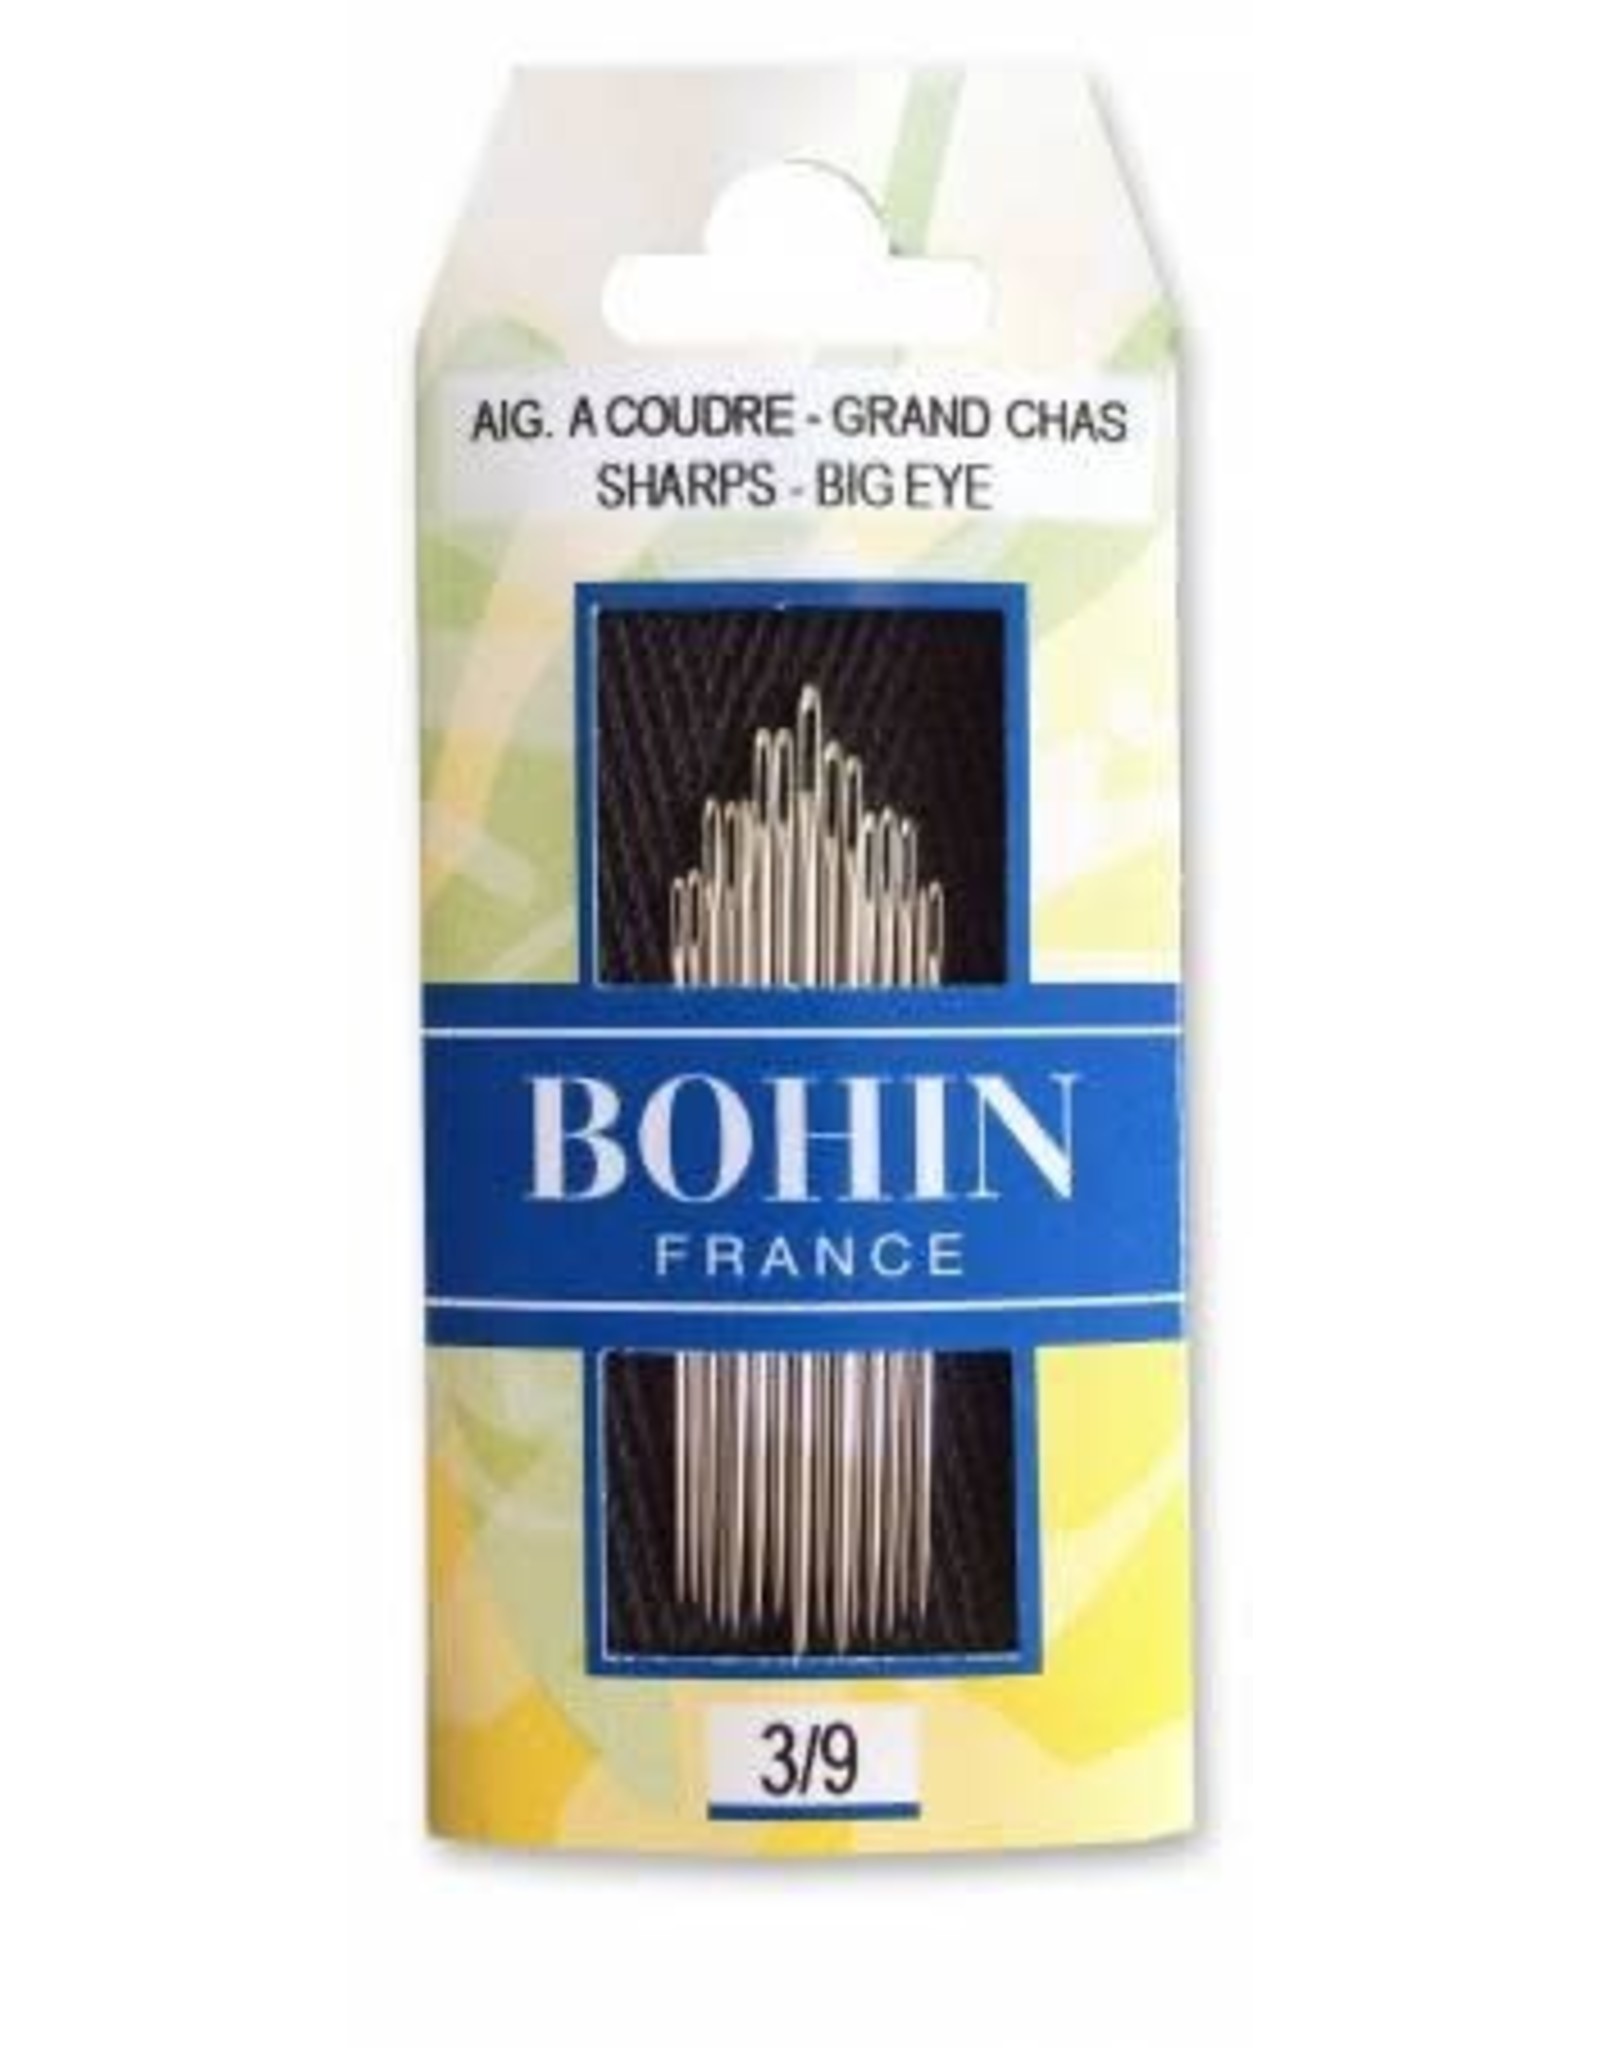 Bohin Big Eye Sharps Needles, Assorted Sizes 3/9 - 15 ct., Bohin